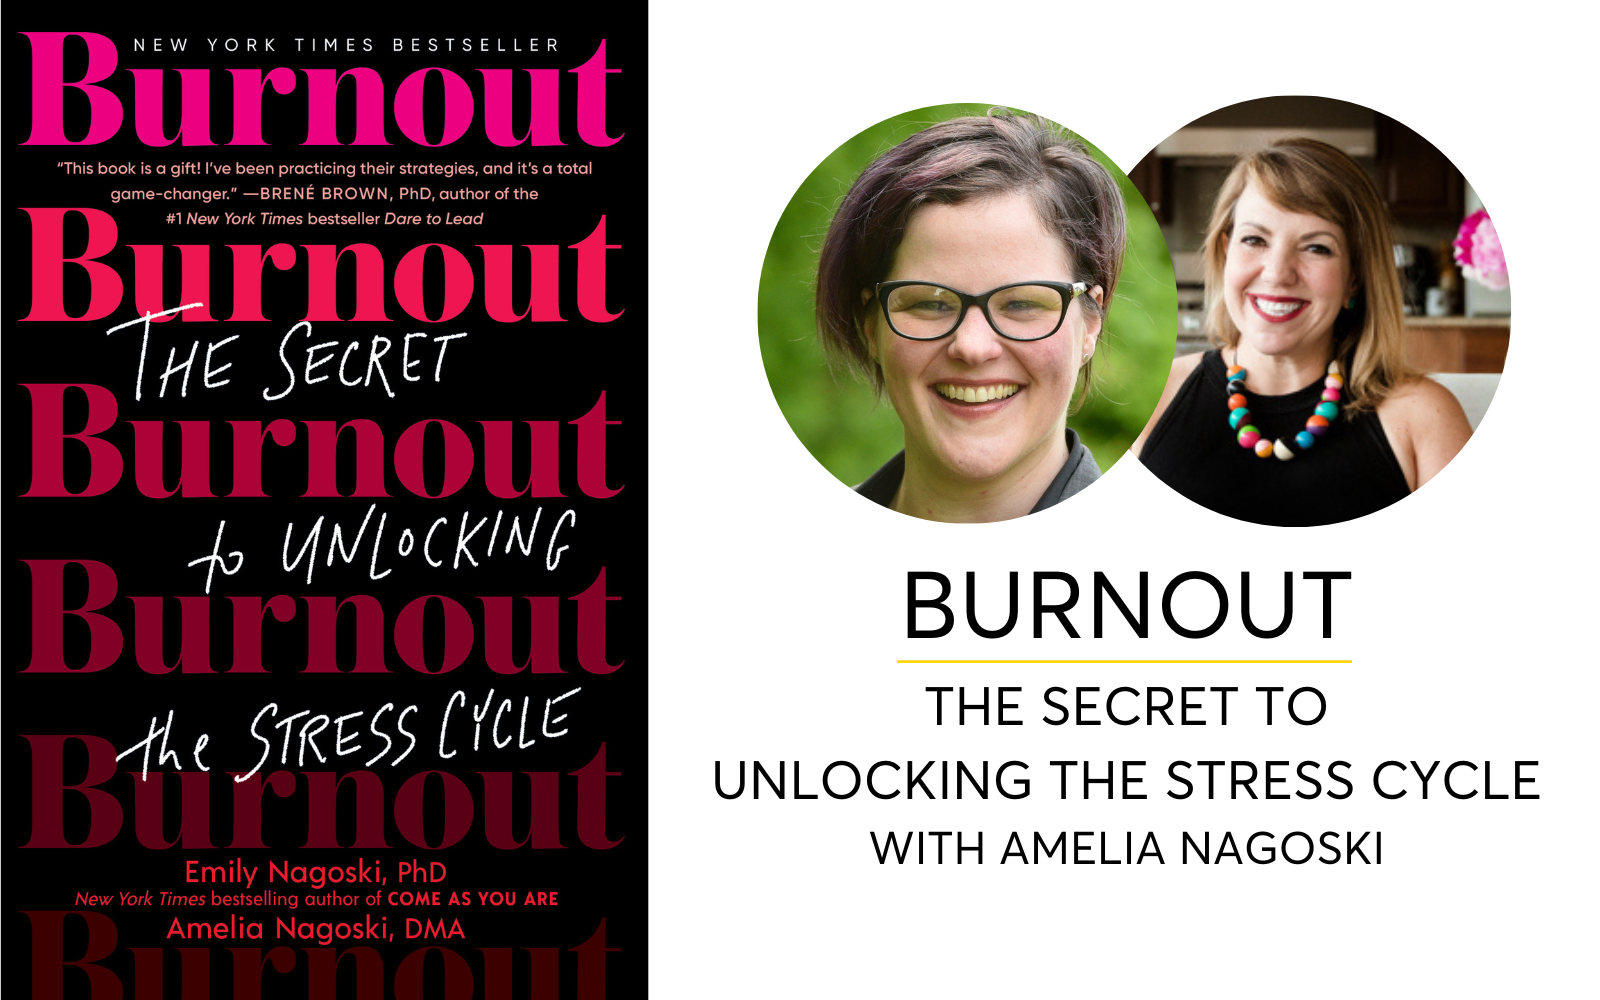 Burnout: The Secret To Unlocking The Stress Cycle with Amelia Nagoski